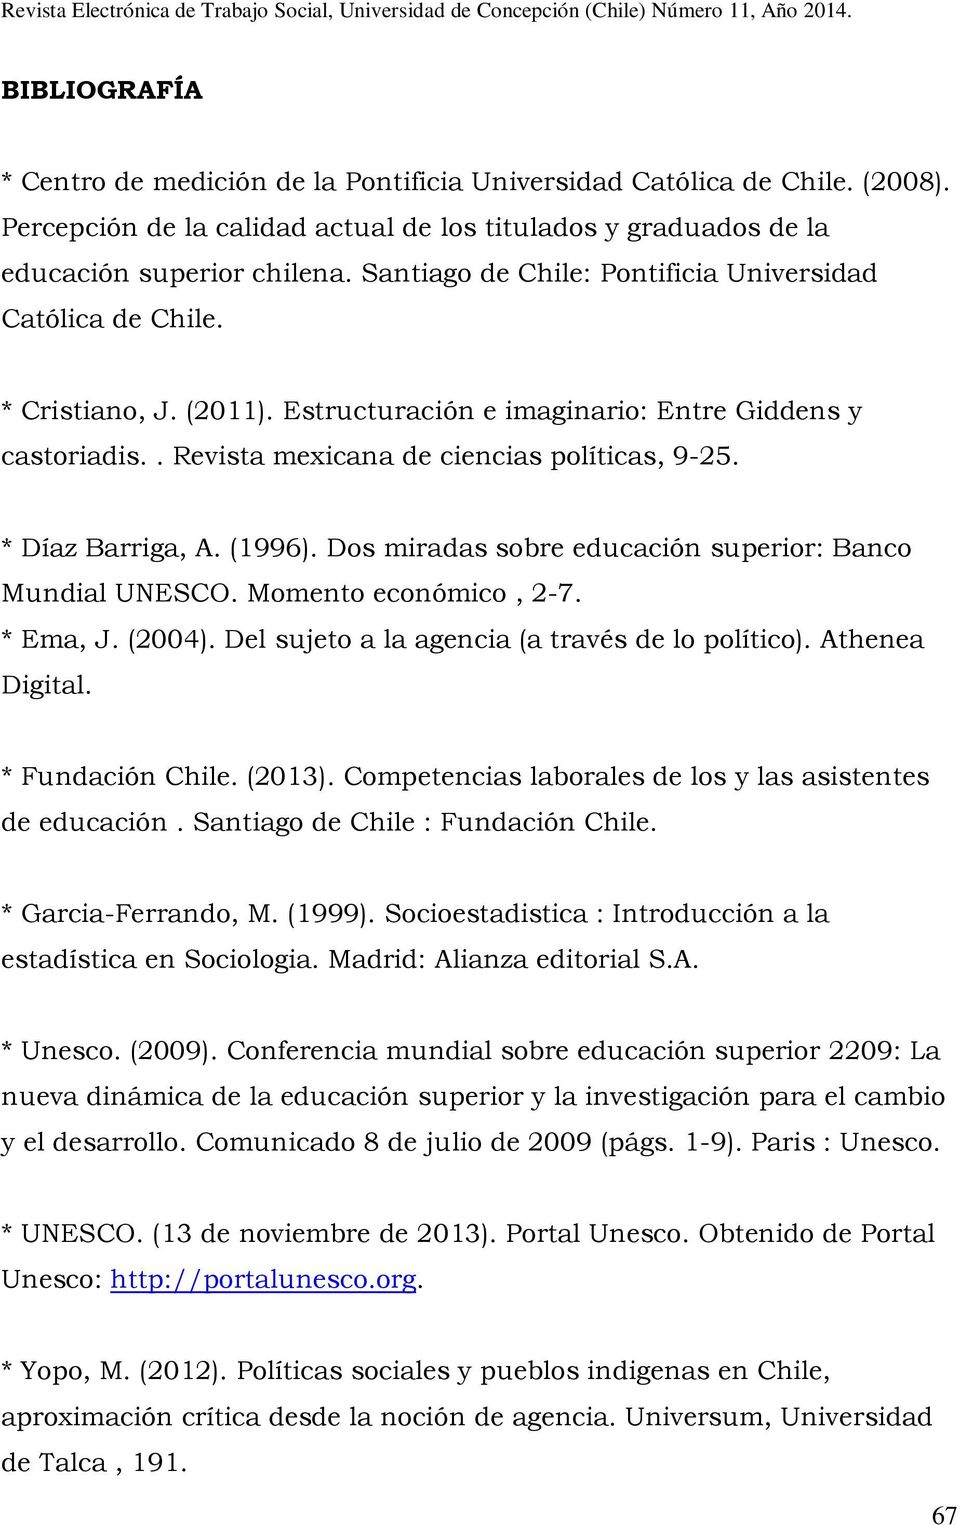 * Díaz Barriga, A. (1996). Dos miradas sobre educación superior: Banco Mundial UNESCO. Momento económico, 2-7. * Ema, J. (2004). Del sujeto a la agencia (a través de lo político). Athenea Digital.